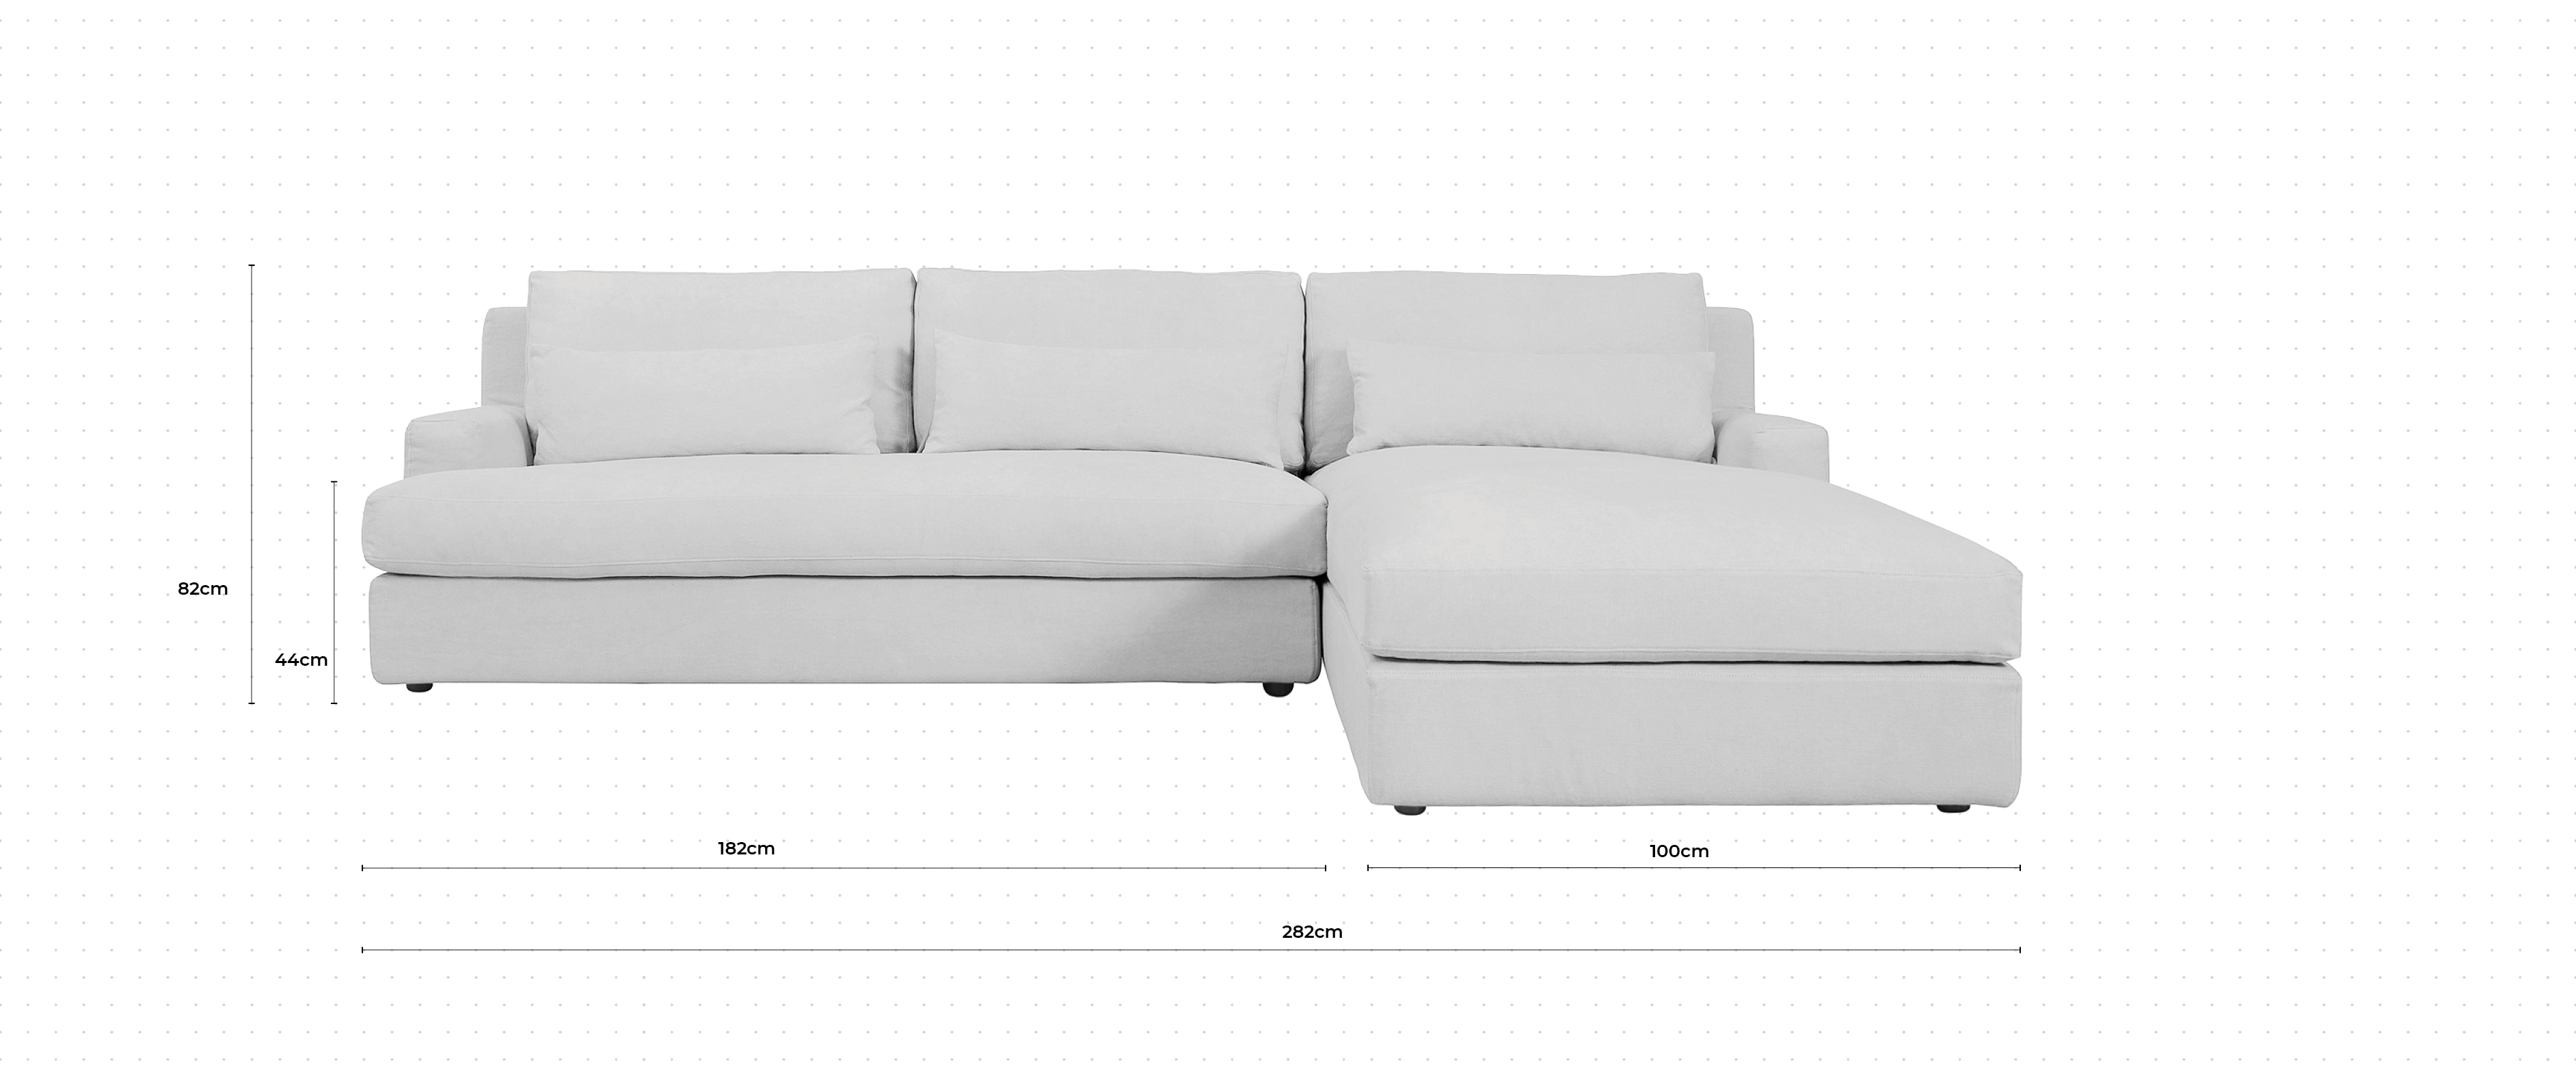 Panama Large Chaise Sofa RHF dimensions